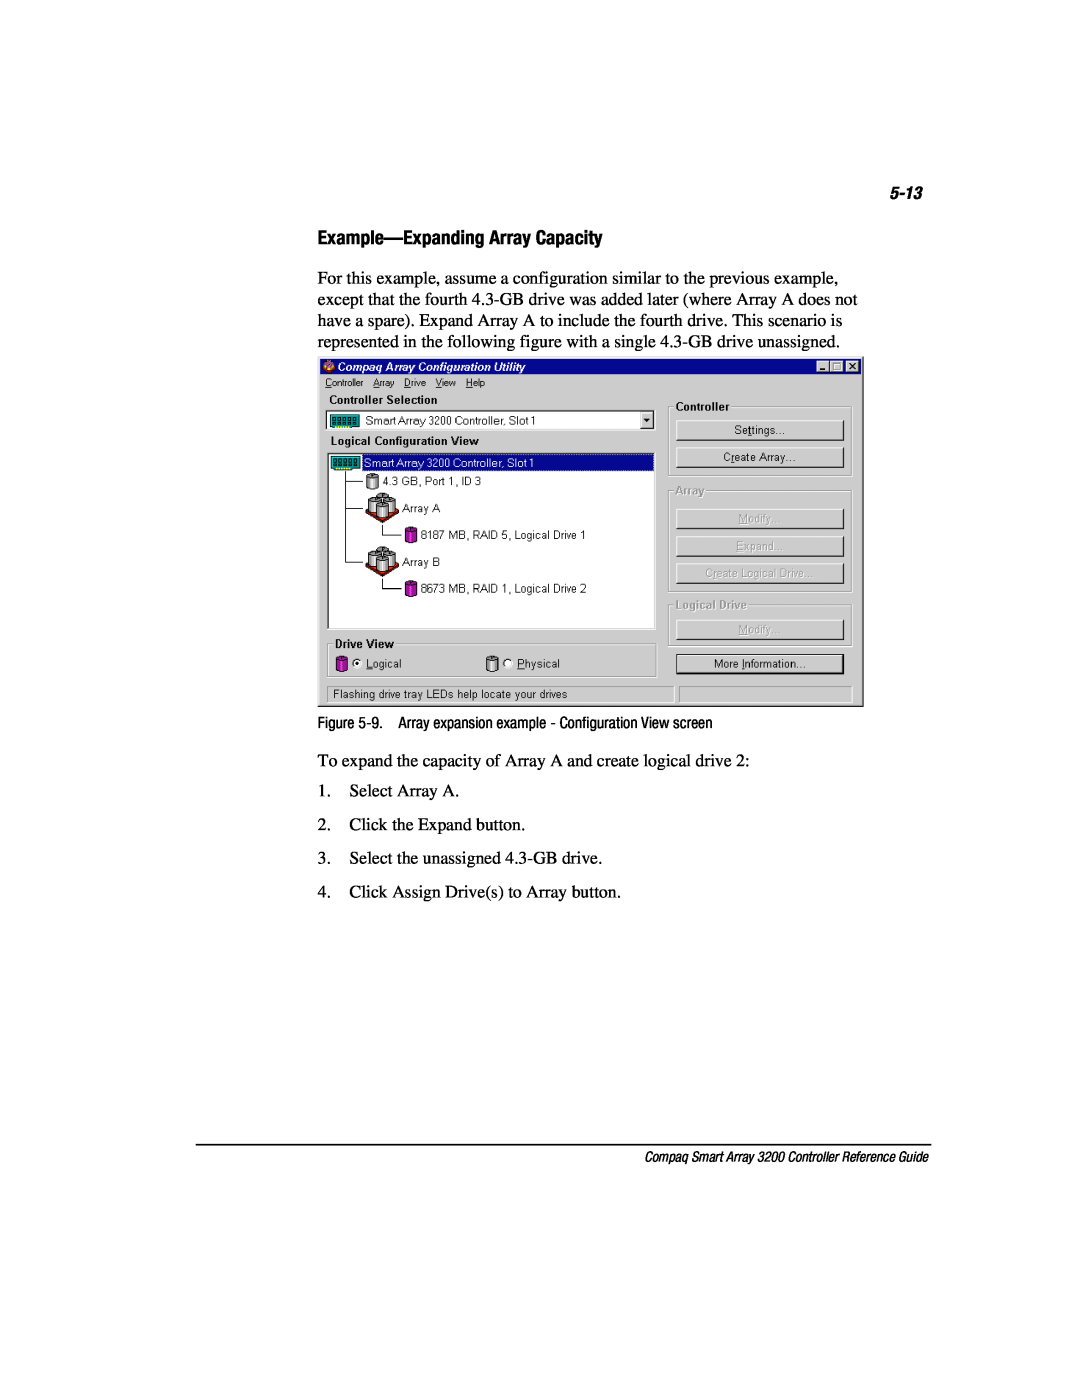 Compaq 3200 manual Example-Expanding Array Capacity, 5-13 